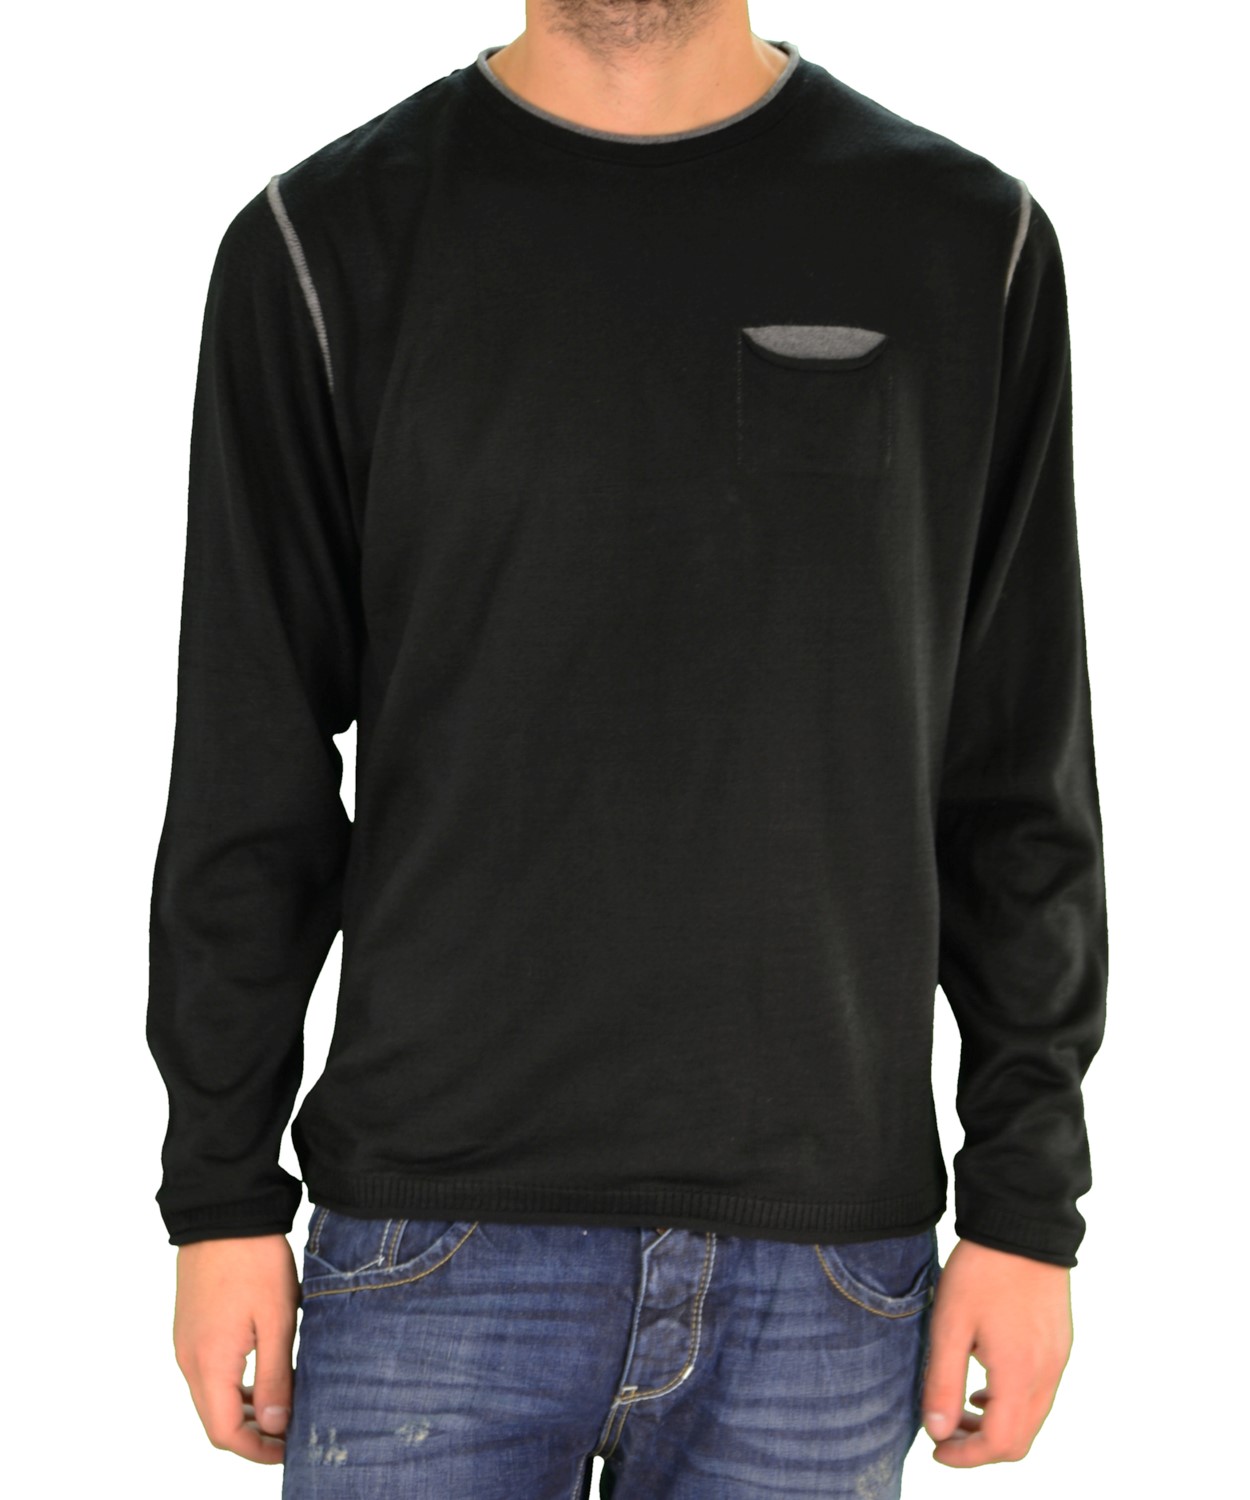 New Look μαύρη πλεκτή μακρυμάνικη μπλούζα 163400